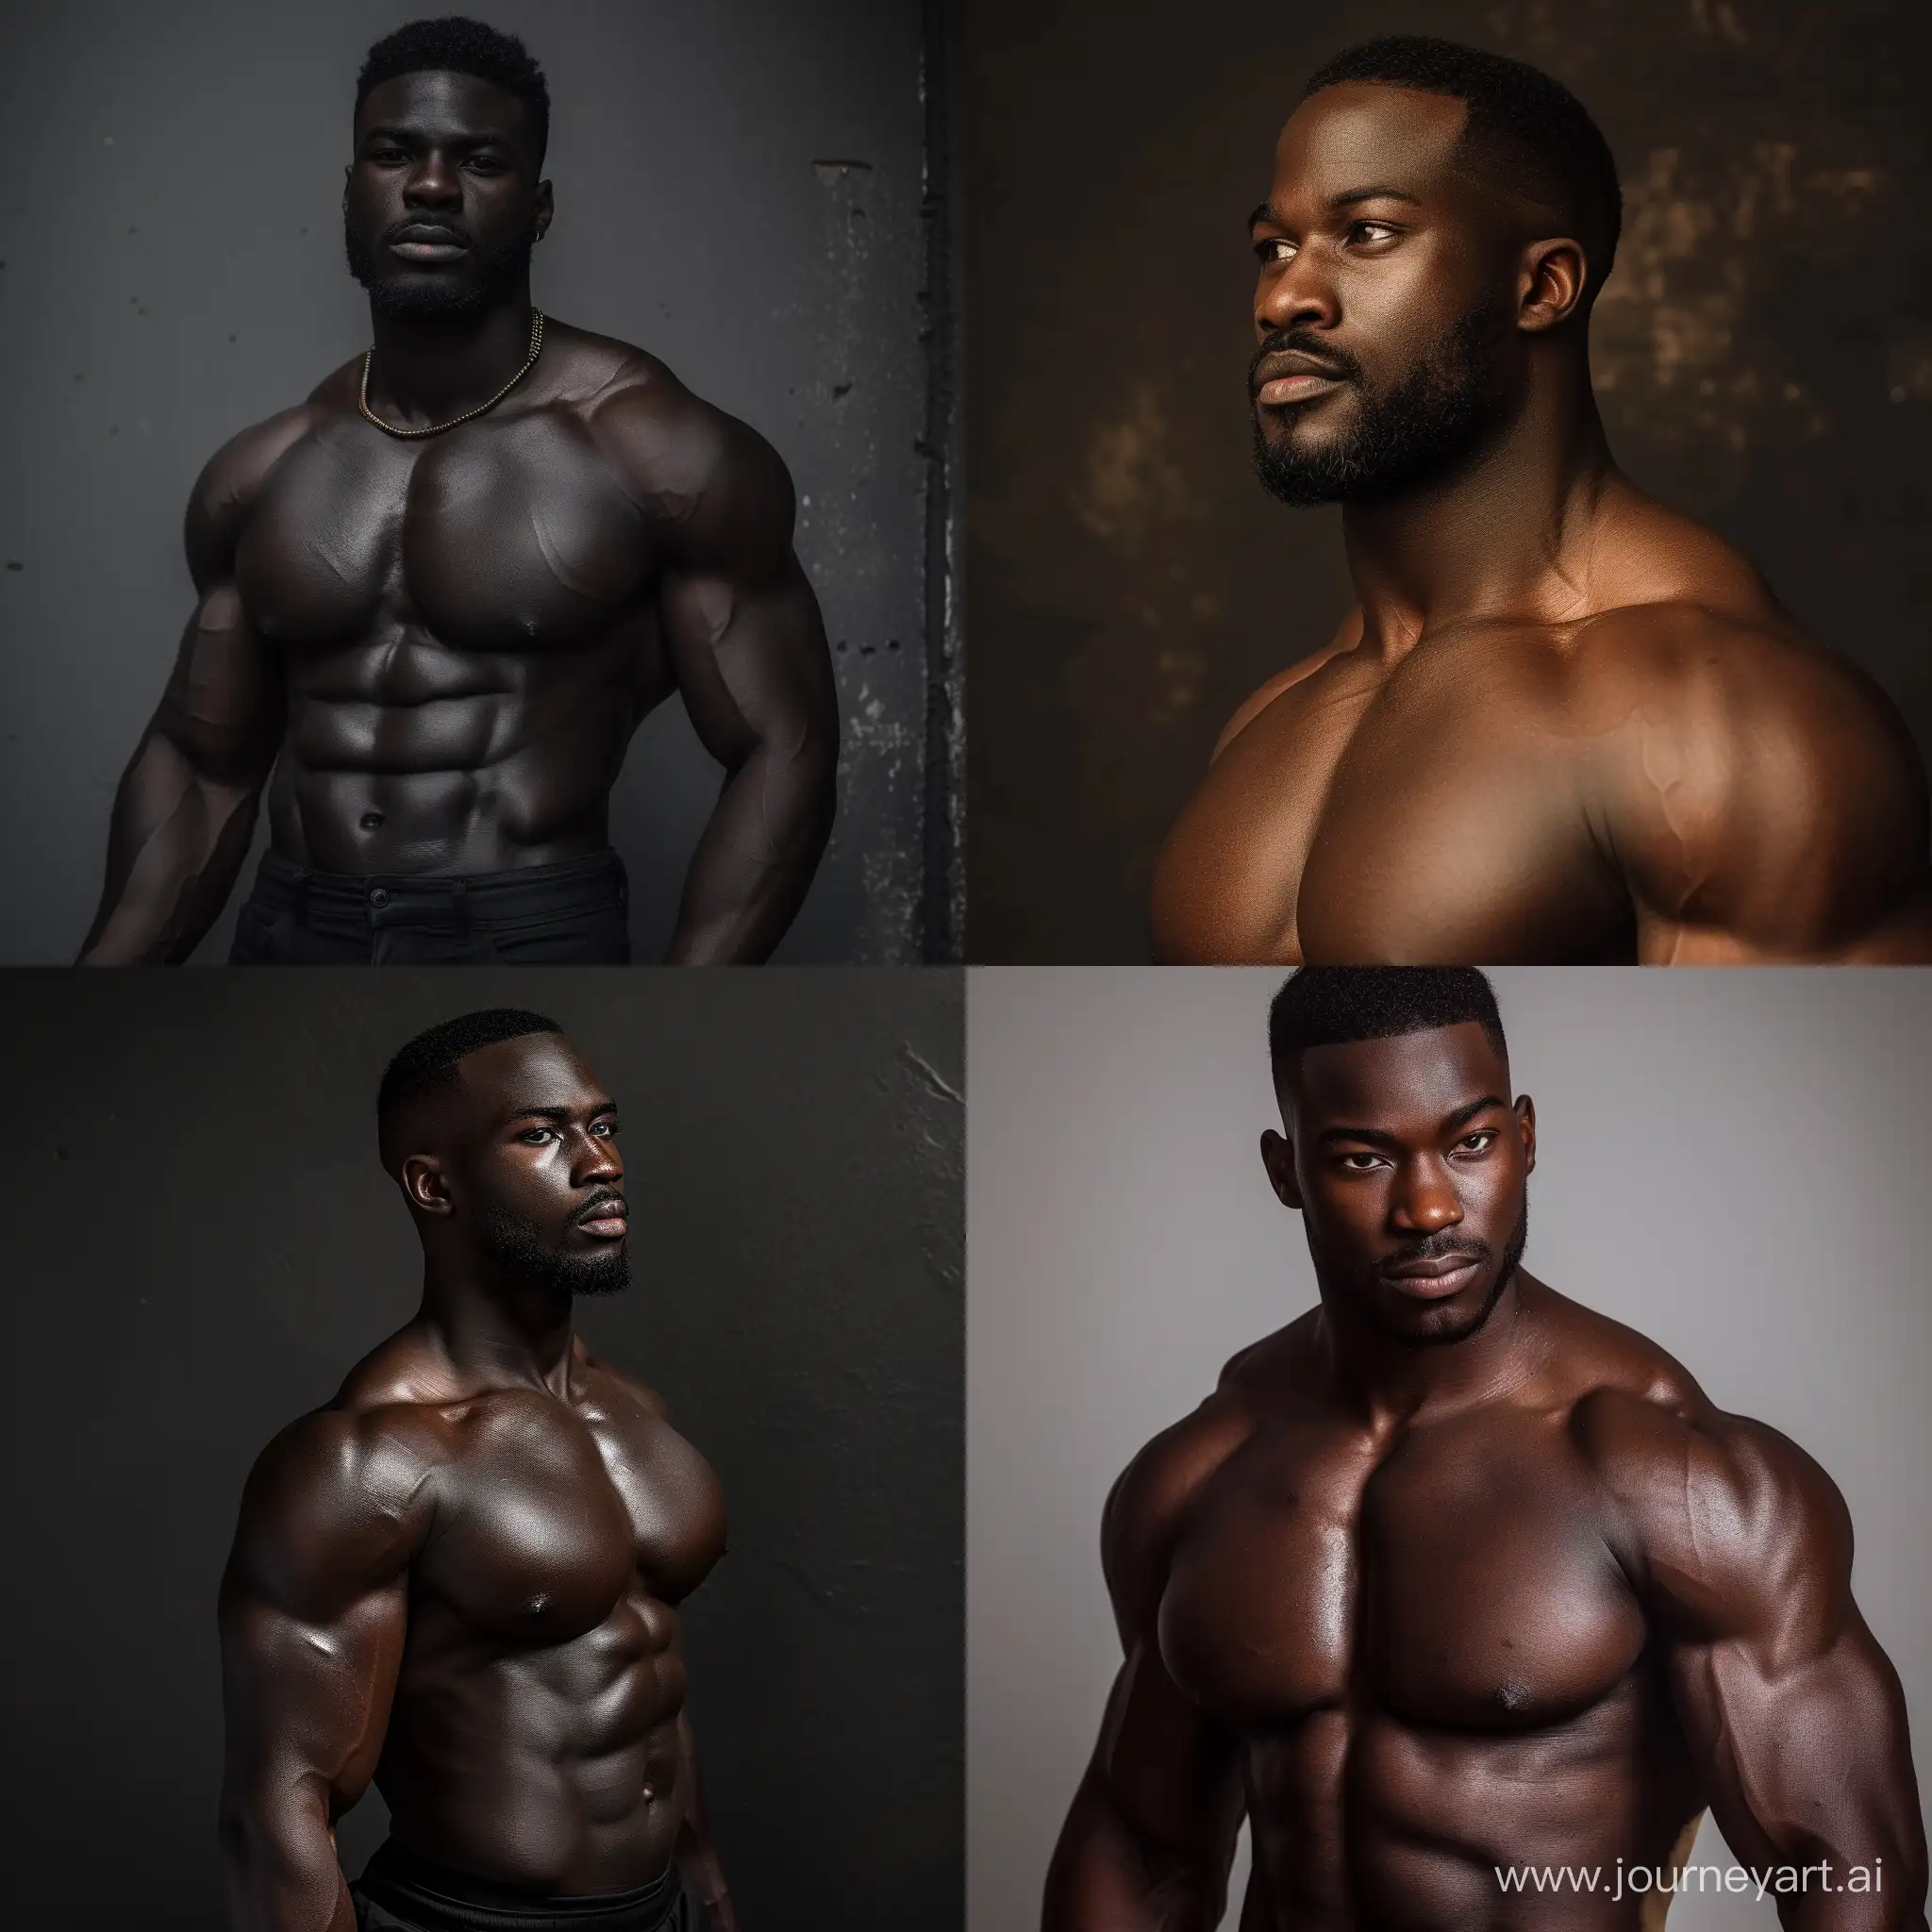 Empowering-Black-Muscular-Gay-Individual-in-Vibrant-Artistic-Display